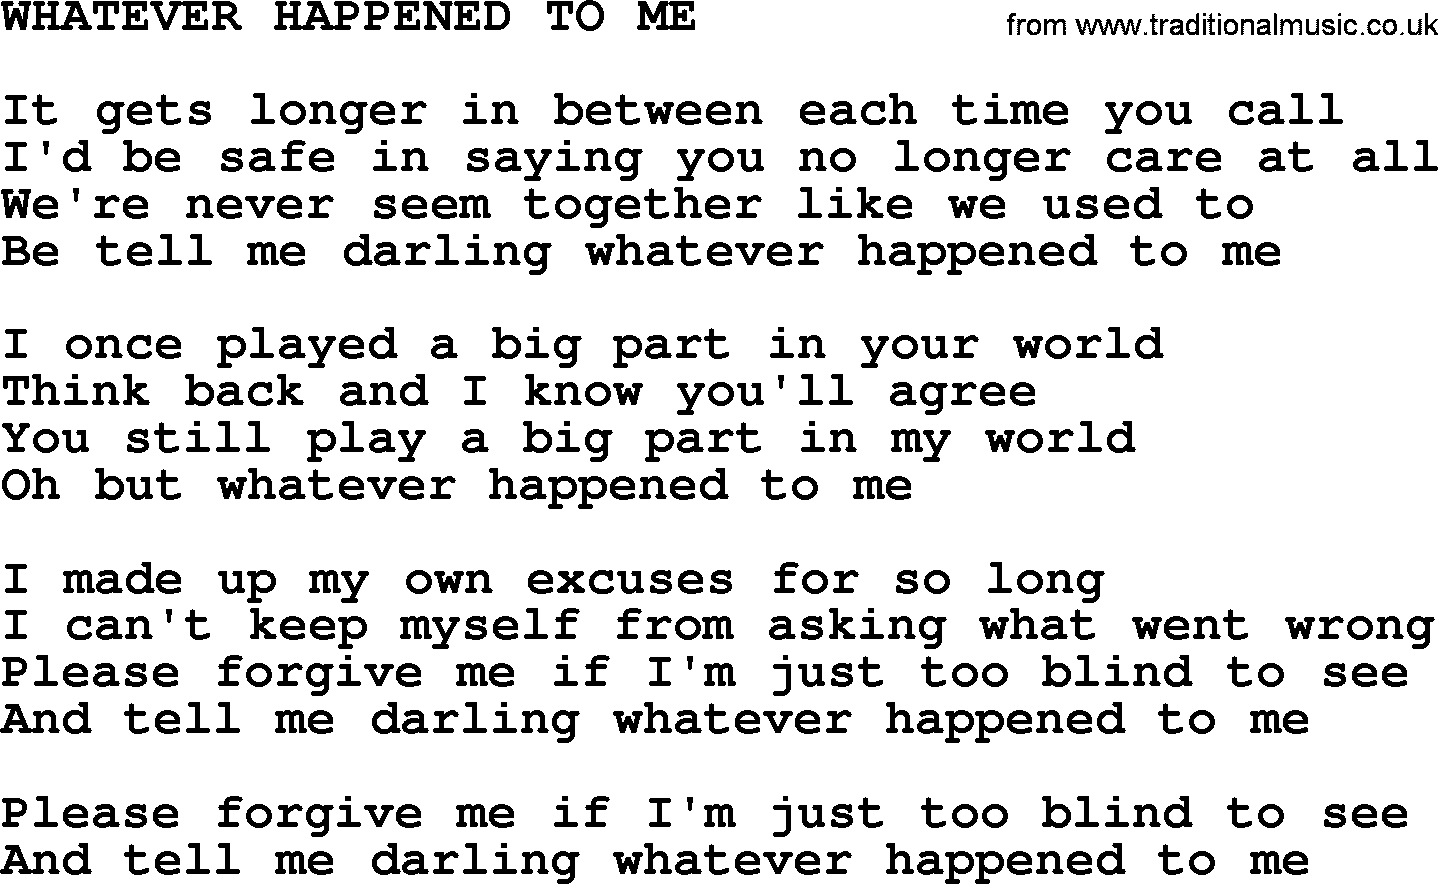 Merle Haggard song: Whatever Happened To Me, lyrics.